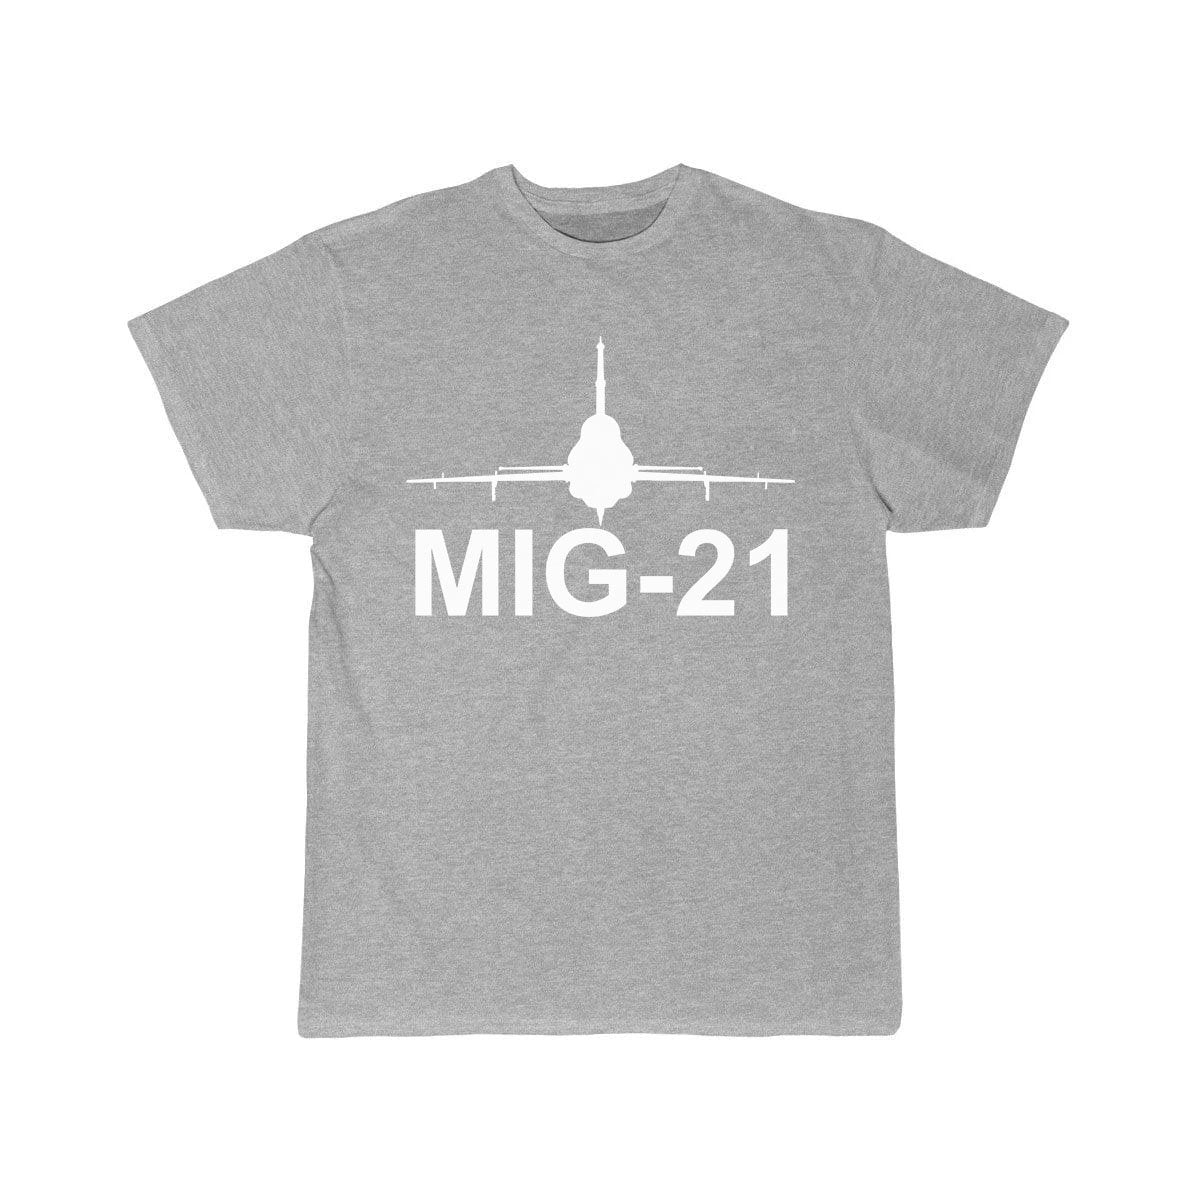 MIG 21 DESIGNED T SHIRT THE AV8R